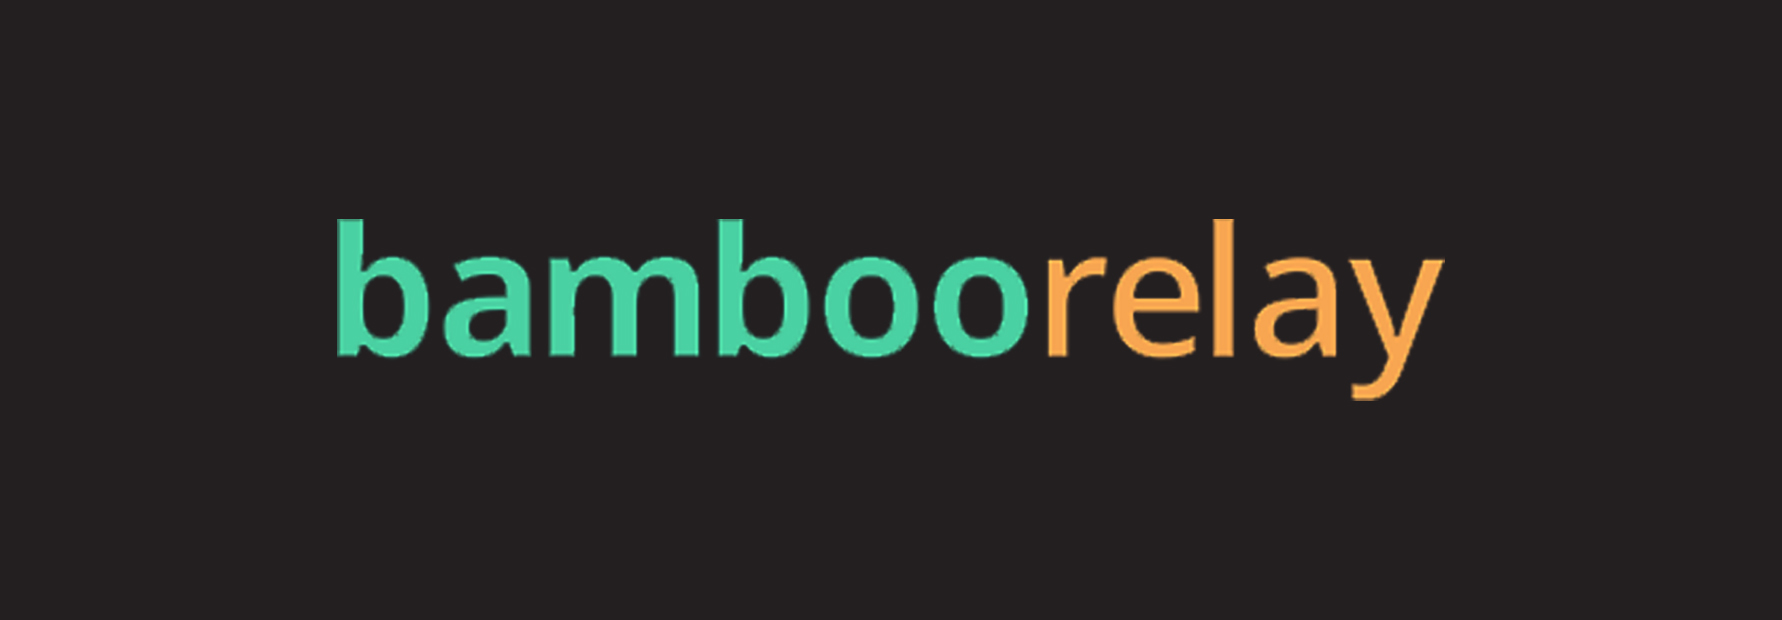 bamboorelay-logo.jpg